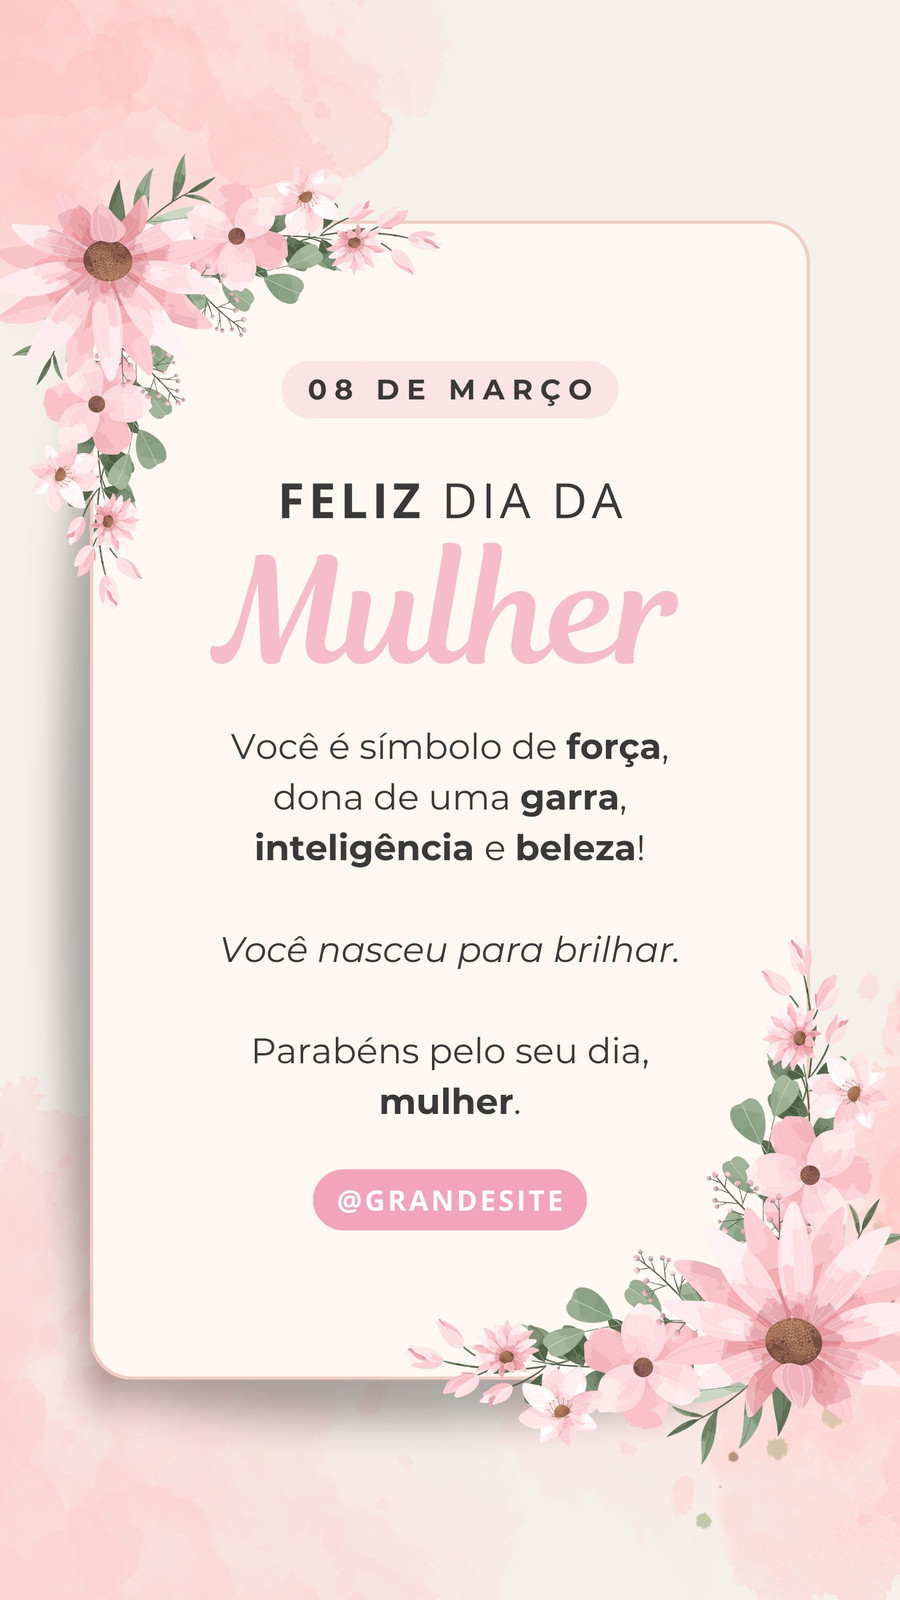 https://marketplace.canva.com/EAF9_6KTHjs/1/0/900w/canva-mensagem-feliz-dia-da-mulher-minimalista-rosa-story-dM4vVycDuPY.jpg